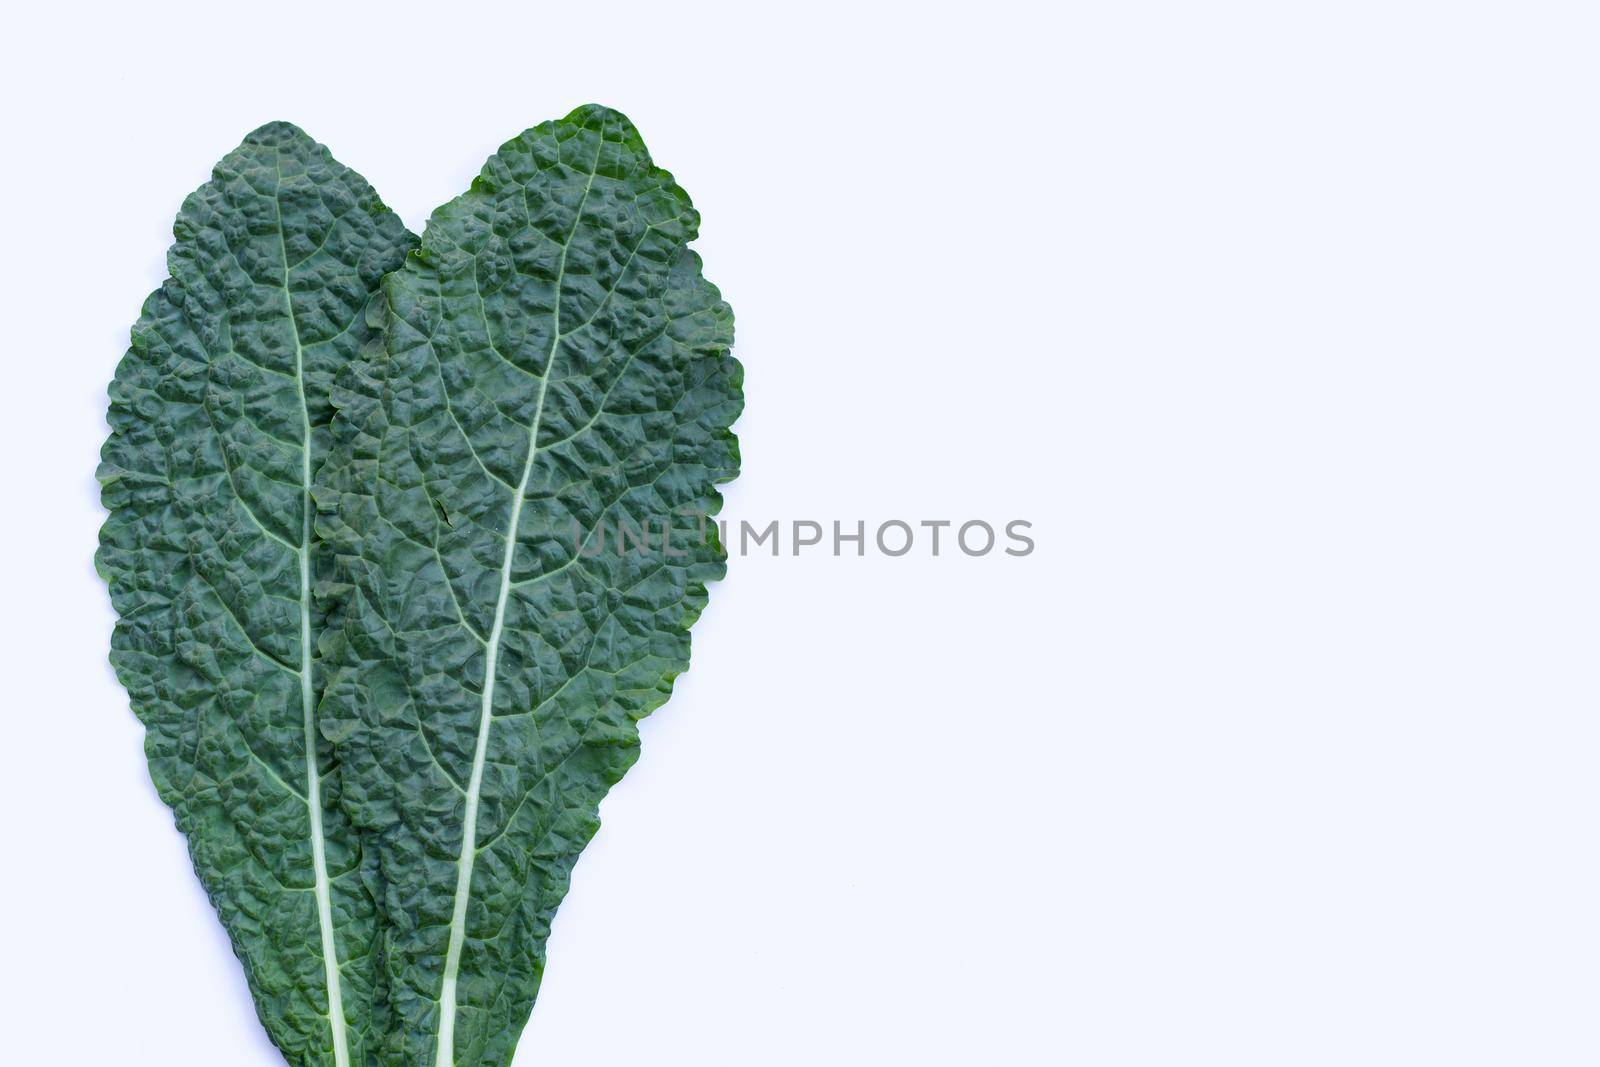 Fresh organic green kale leaves on white background.